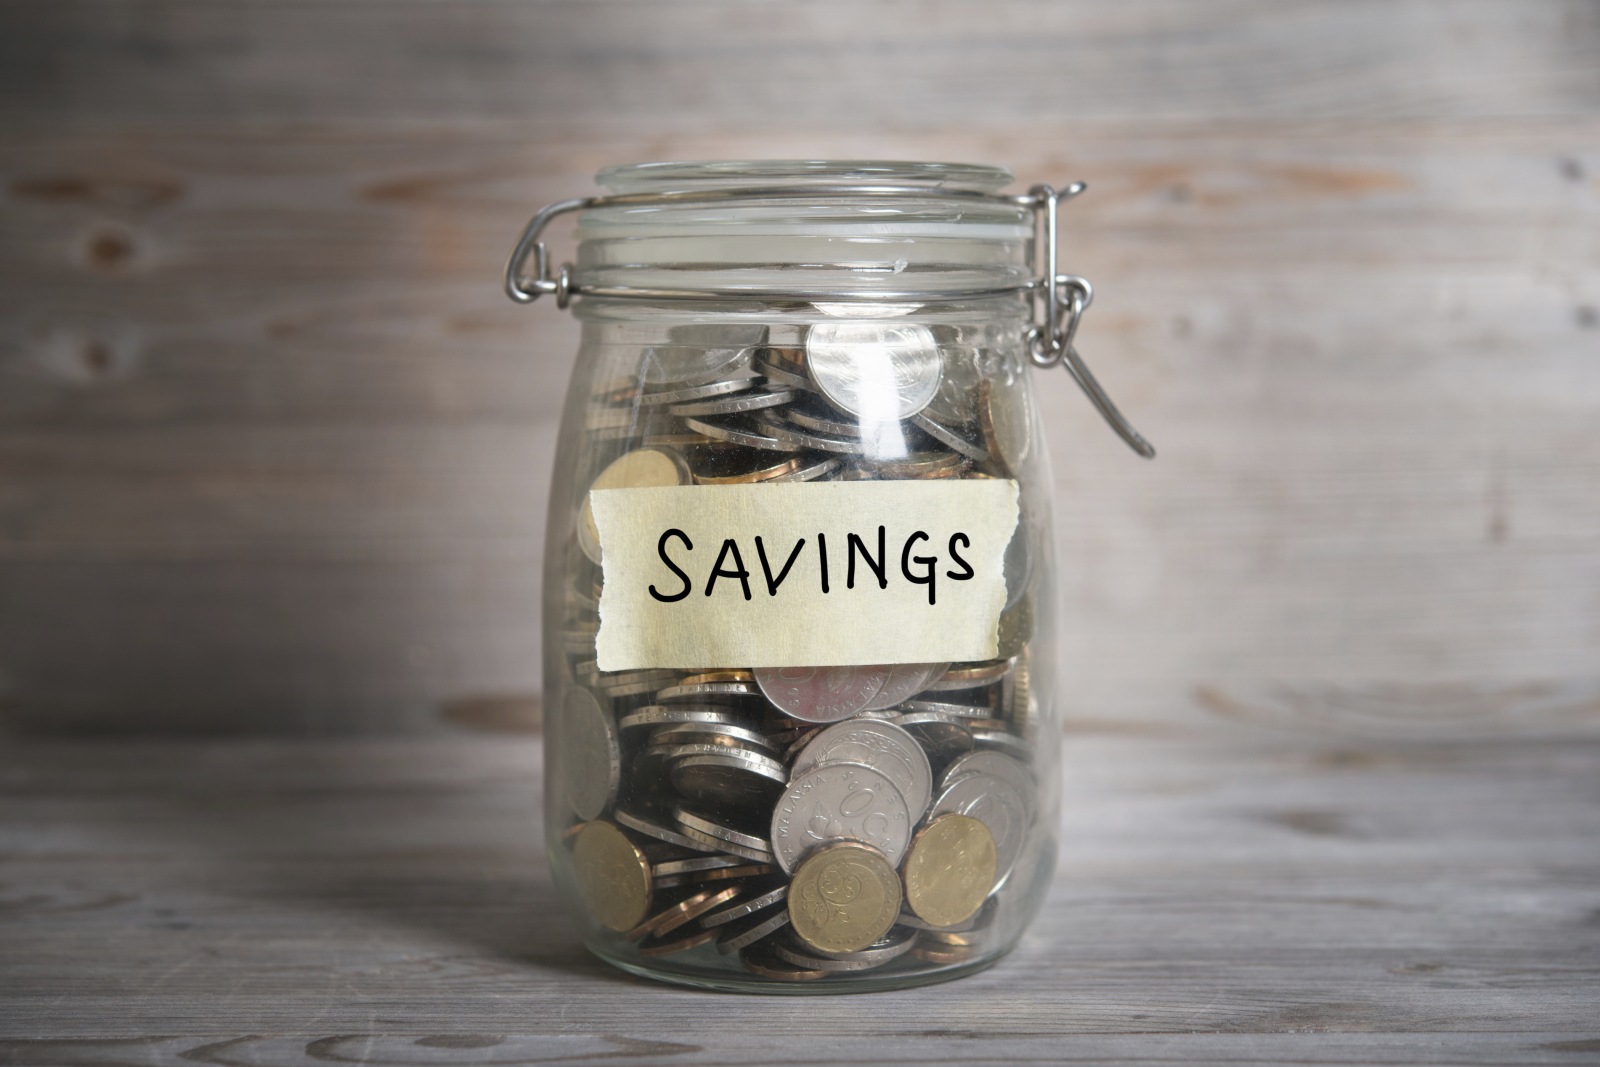 Money jar with savings label.